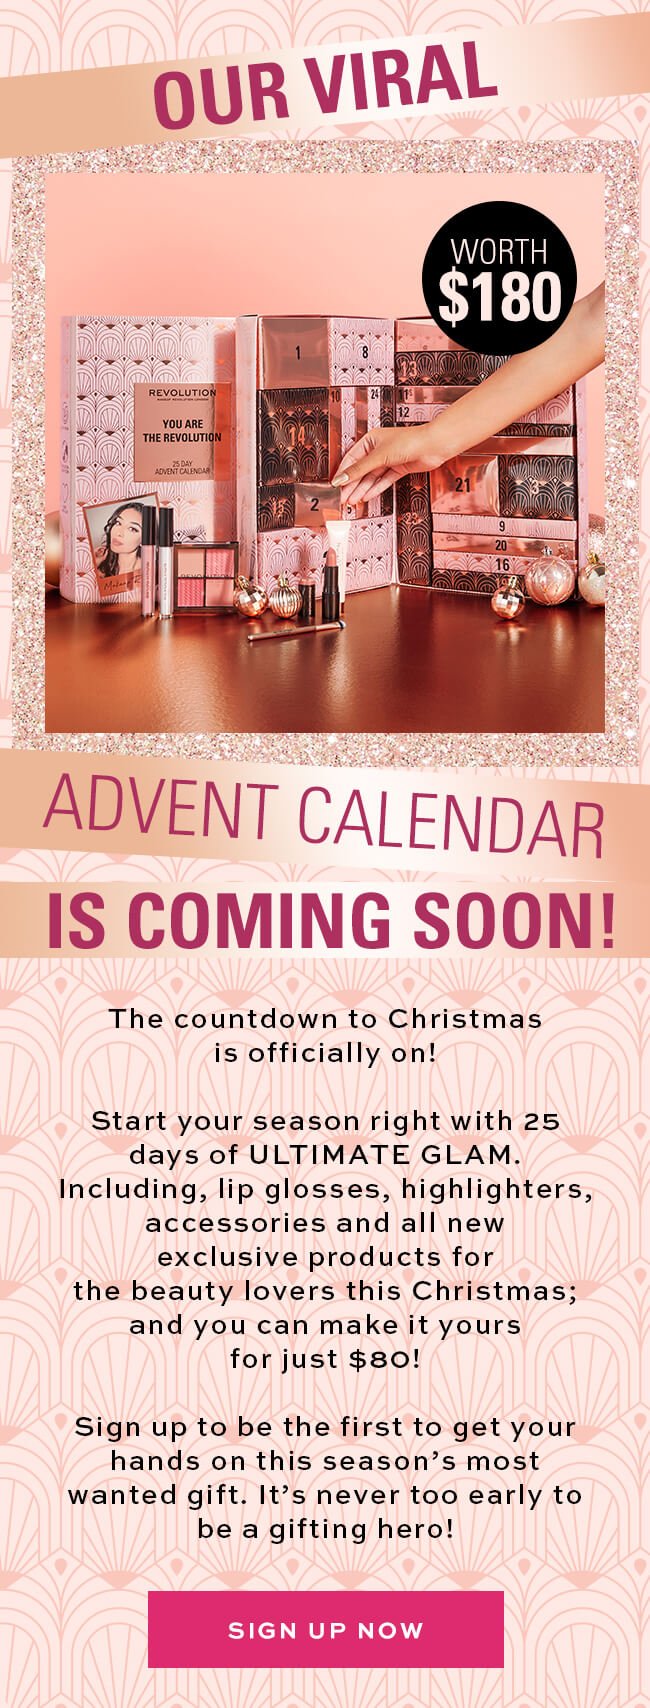 Makeup Revolution Willy Wonka Advent Calendar 2023 - 50% off